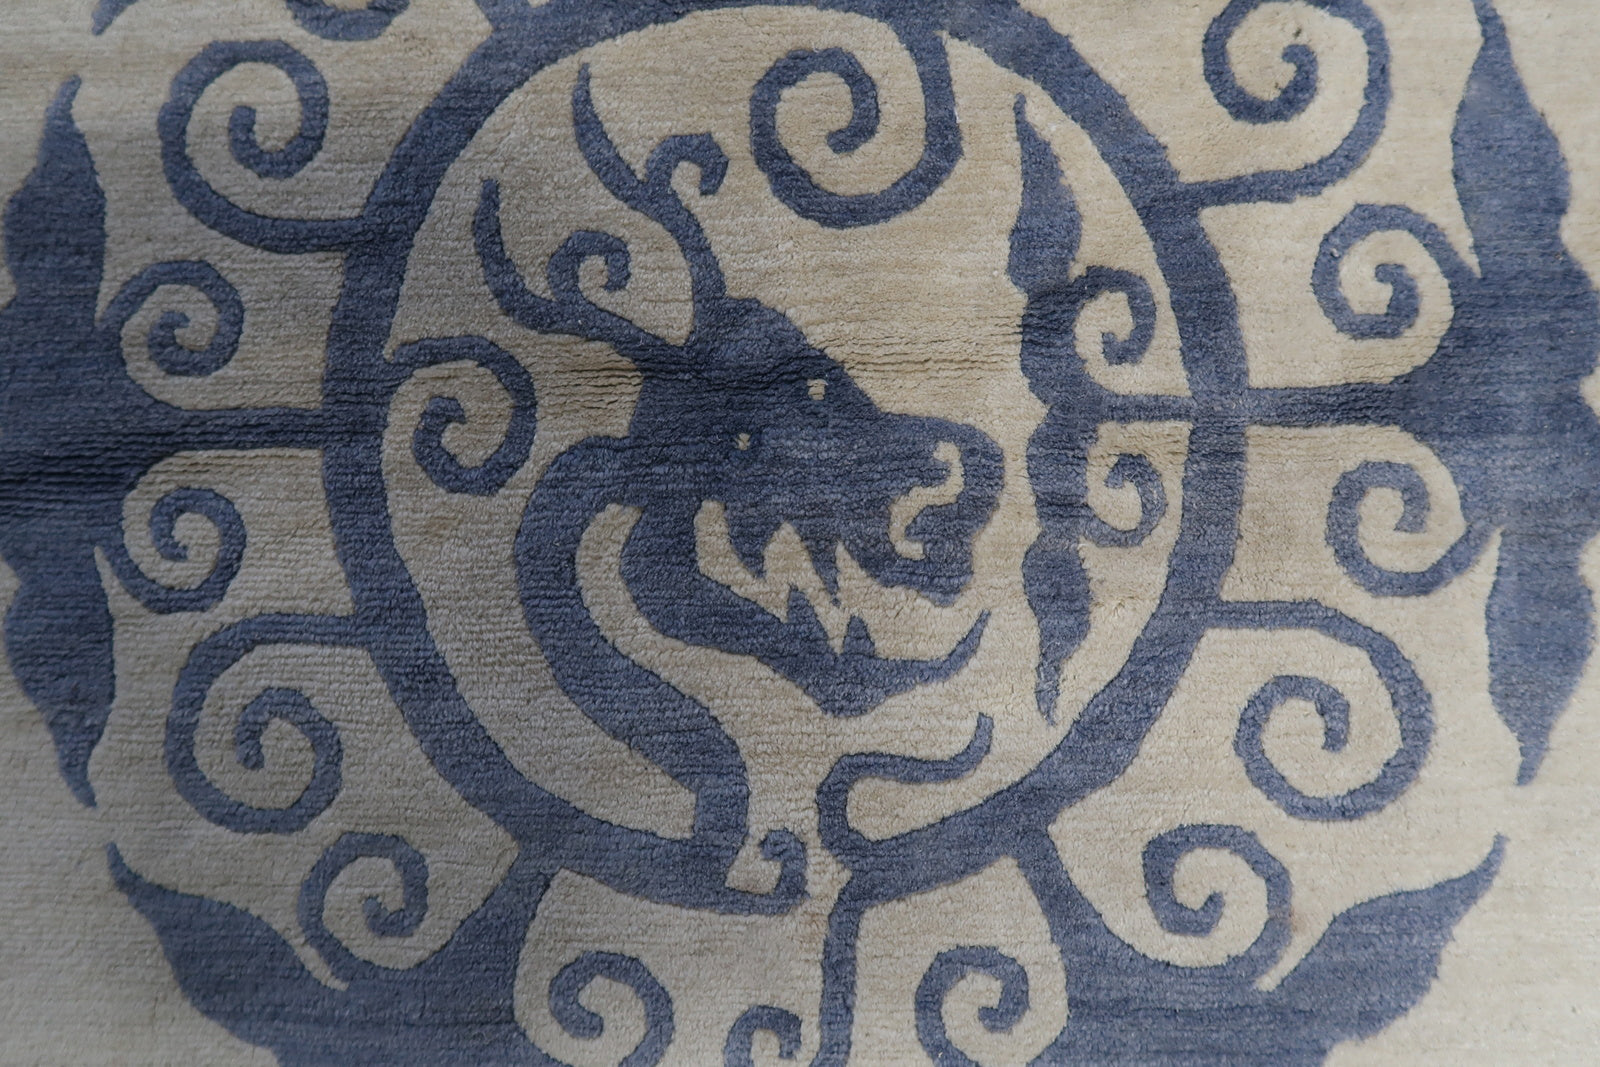 Original good condition of the handmade vintage Tibetan Khaden rug